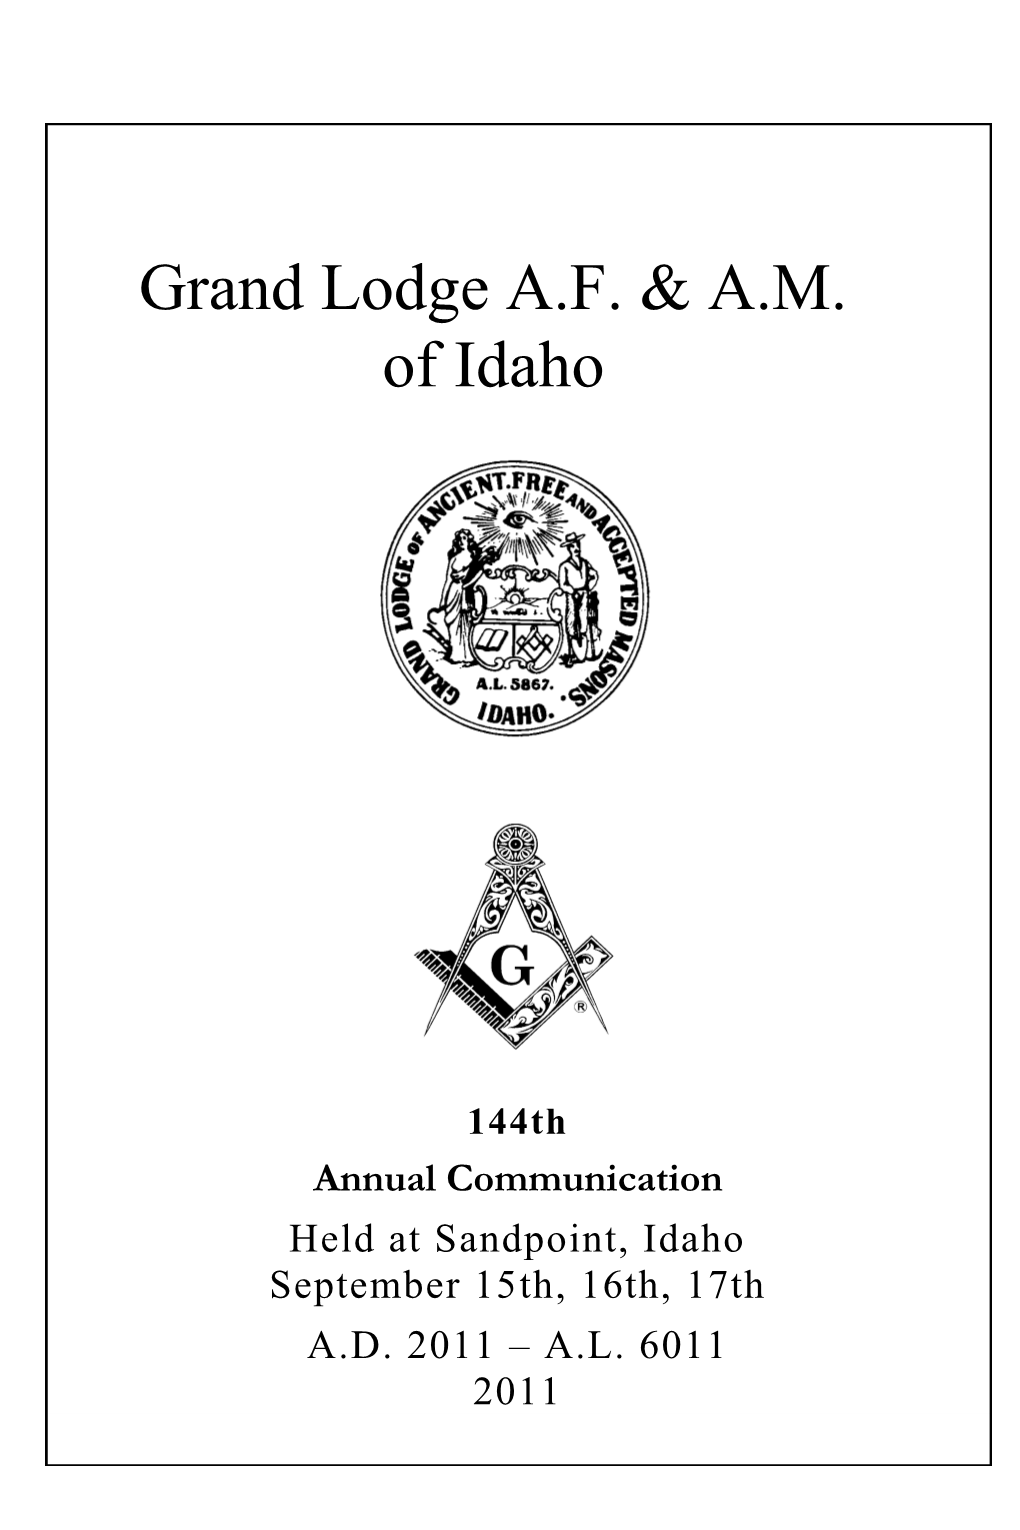 Grand Lodge A.F. & A.M. of Idaho